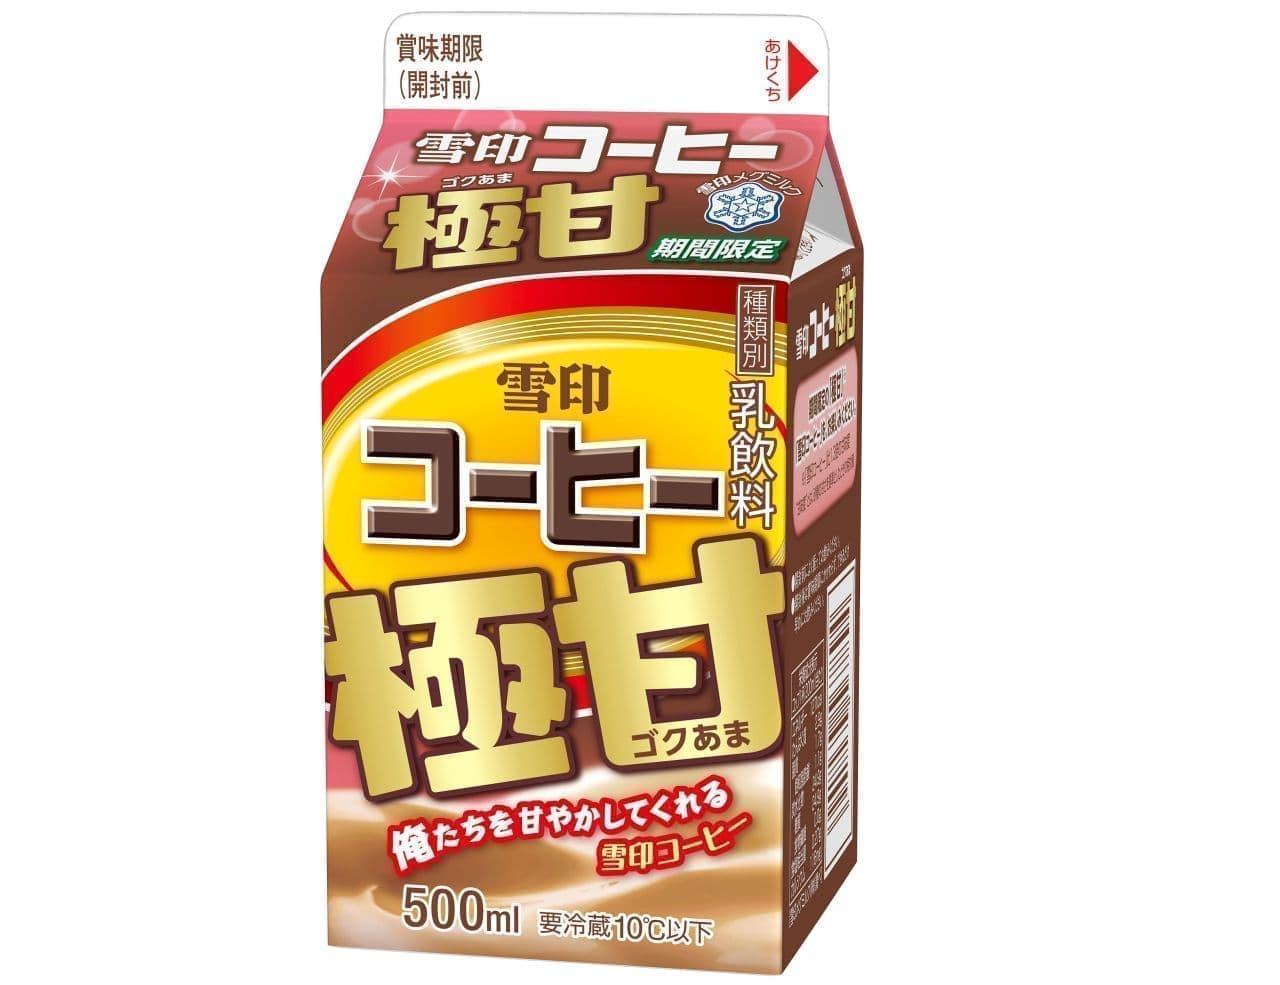 "Snow Brand Coffee Goku Ama" for a limited time